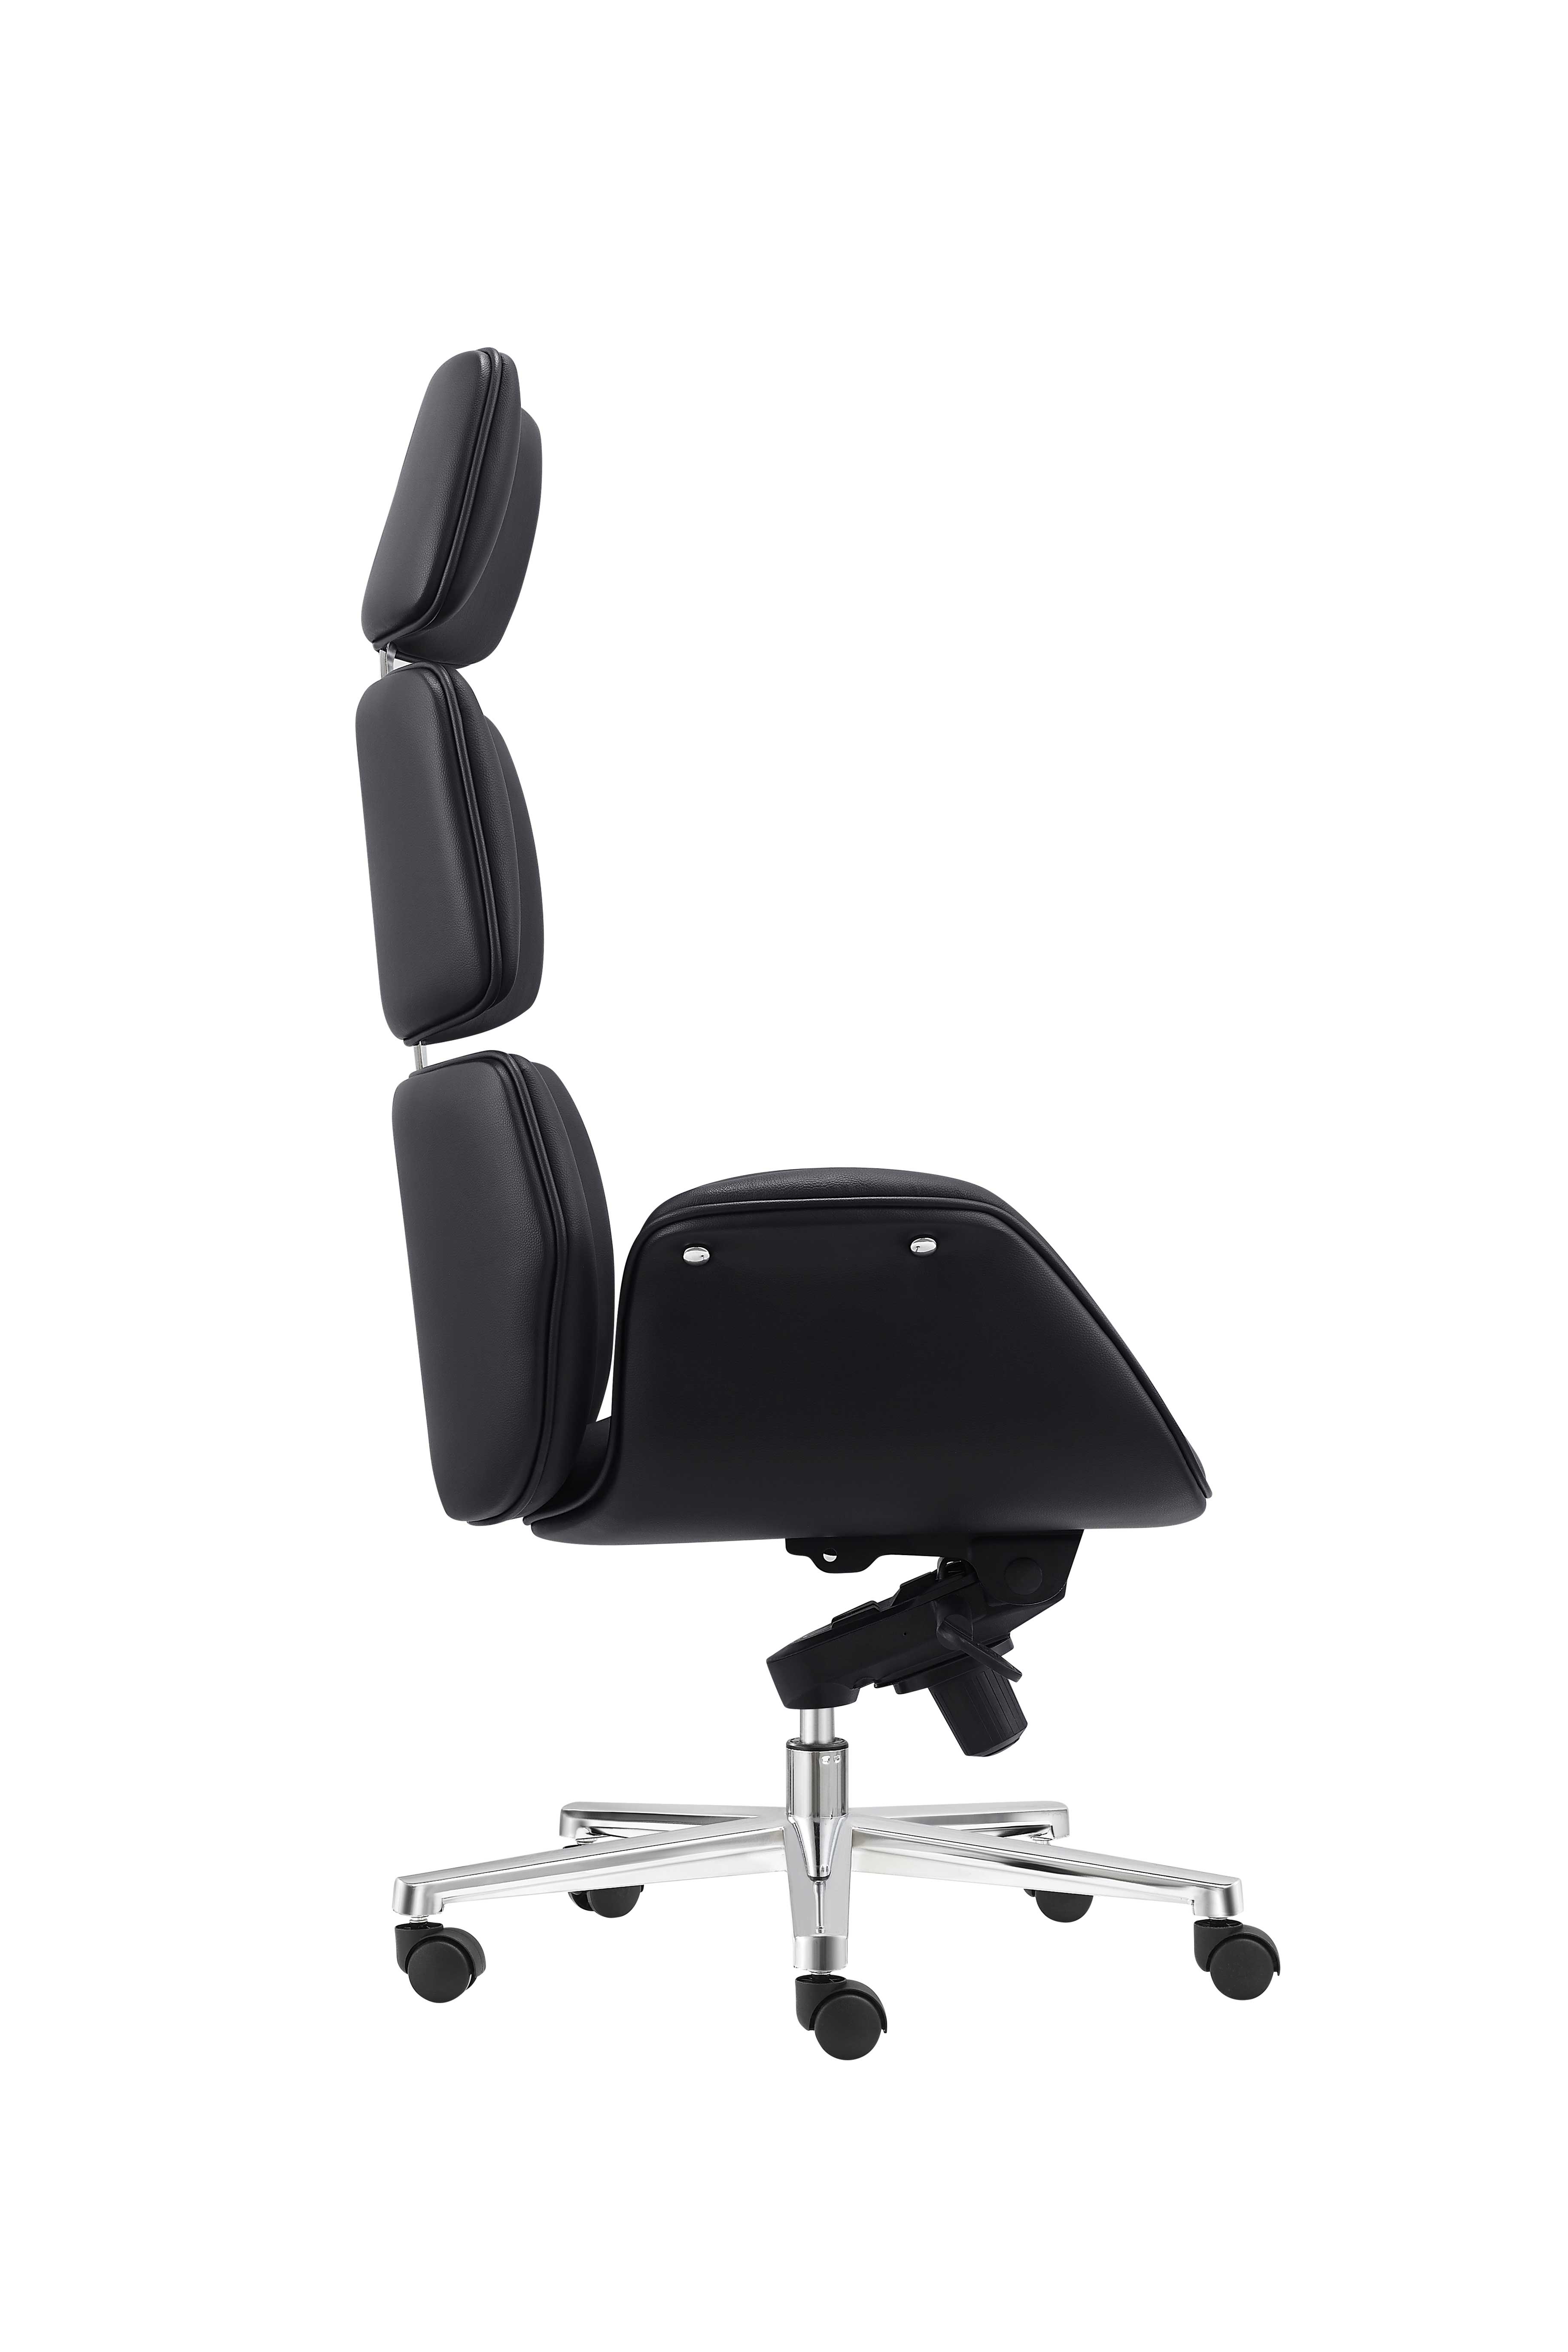 Best Executive Office Chair(DU-1961H)